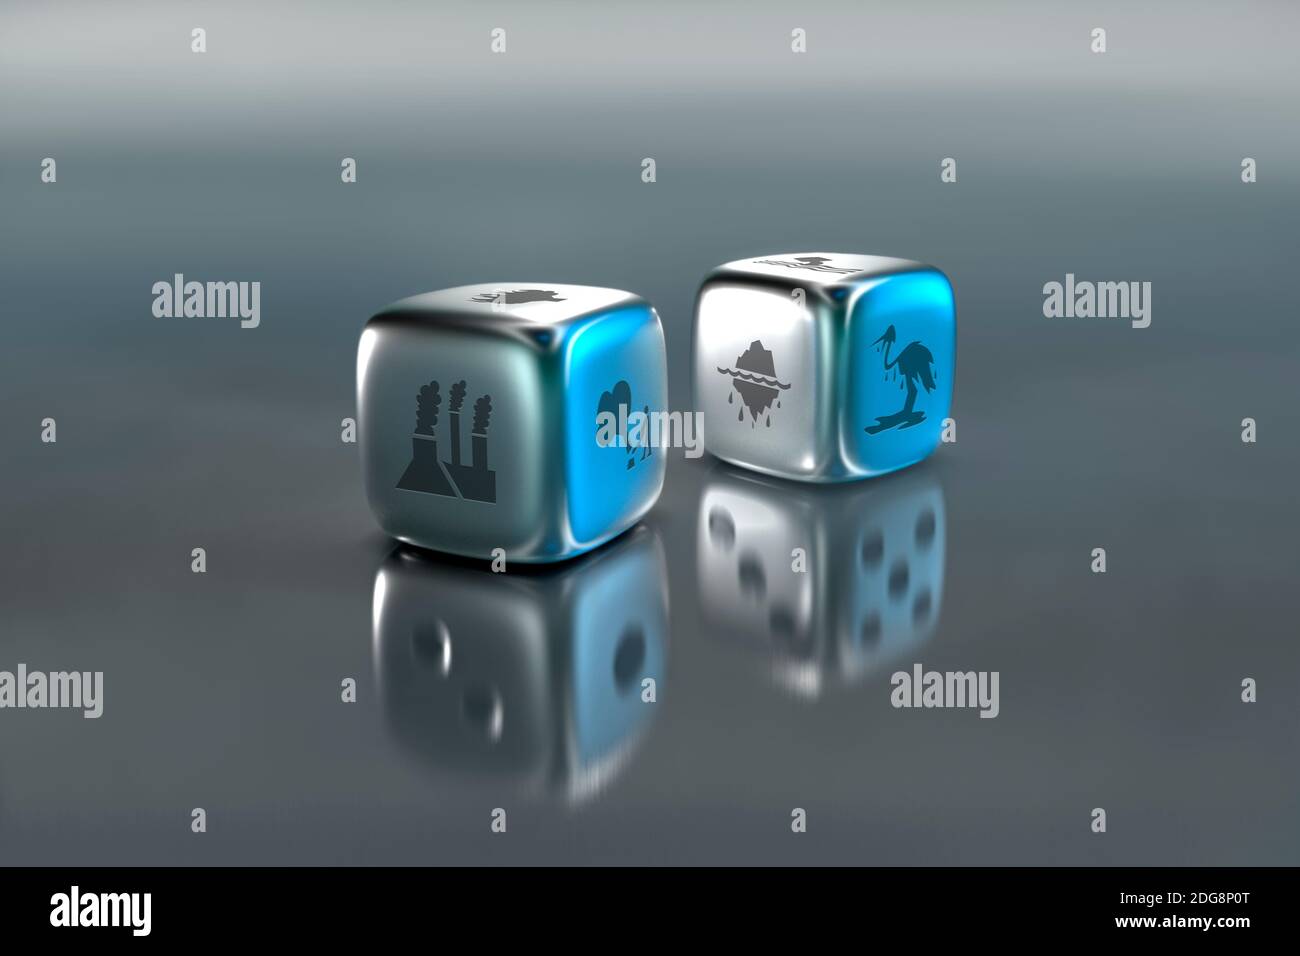 Pair of dice with environmental damage symbols Stock Photo